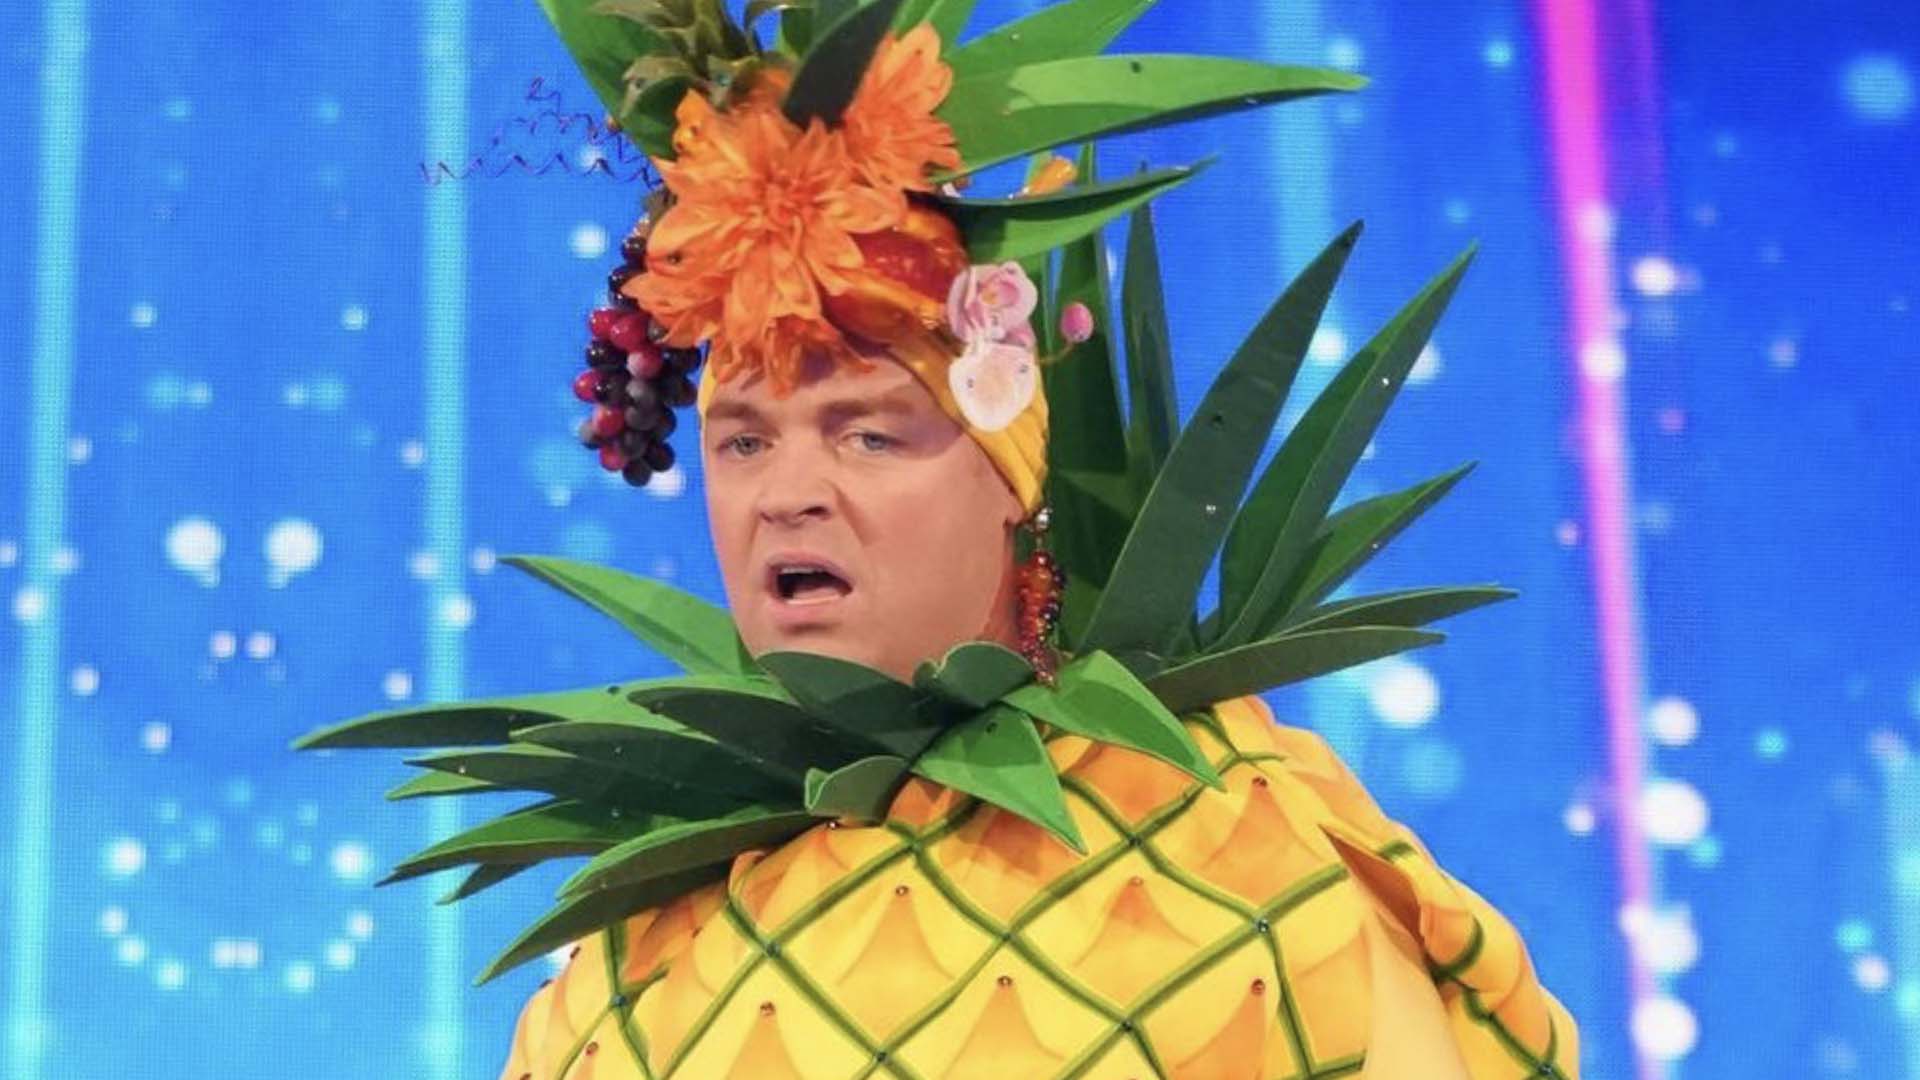 Stephen Mulhern dressed as a pineapple